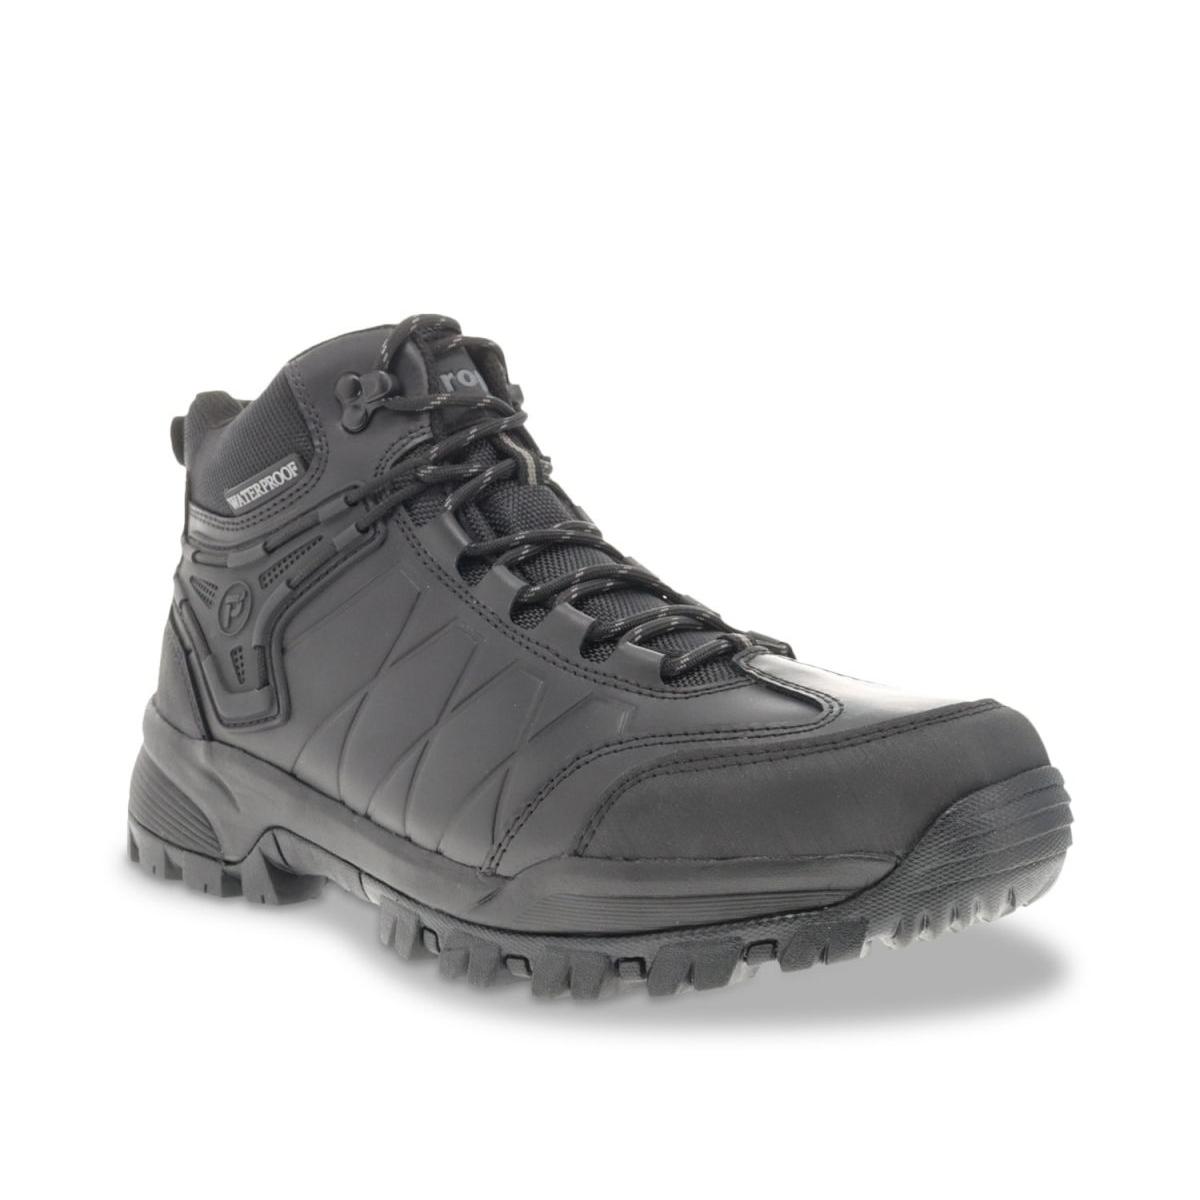 Propet Men's Ridge Walker Force Hiking Boots Black - MBA052LBLK BLACK - BLACK, 11 XX-Wide